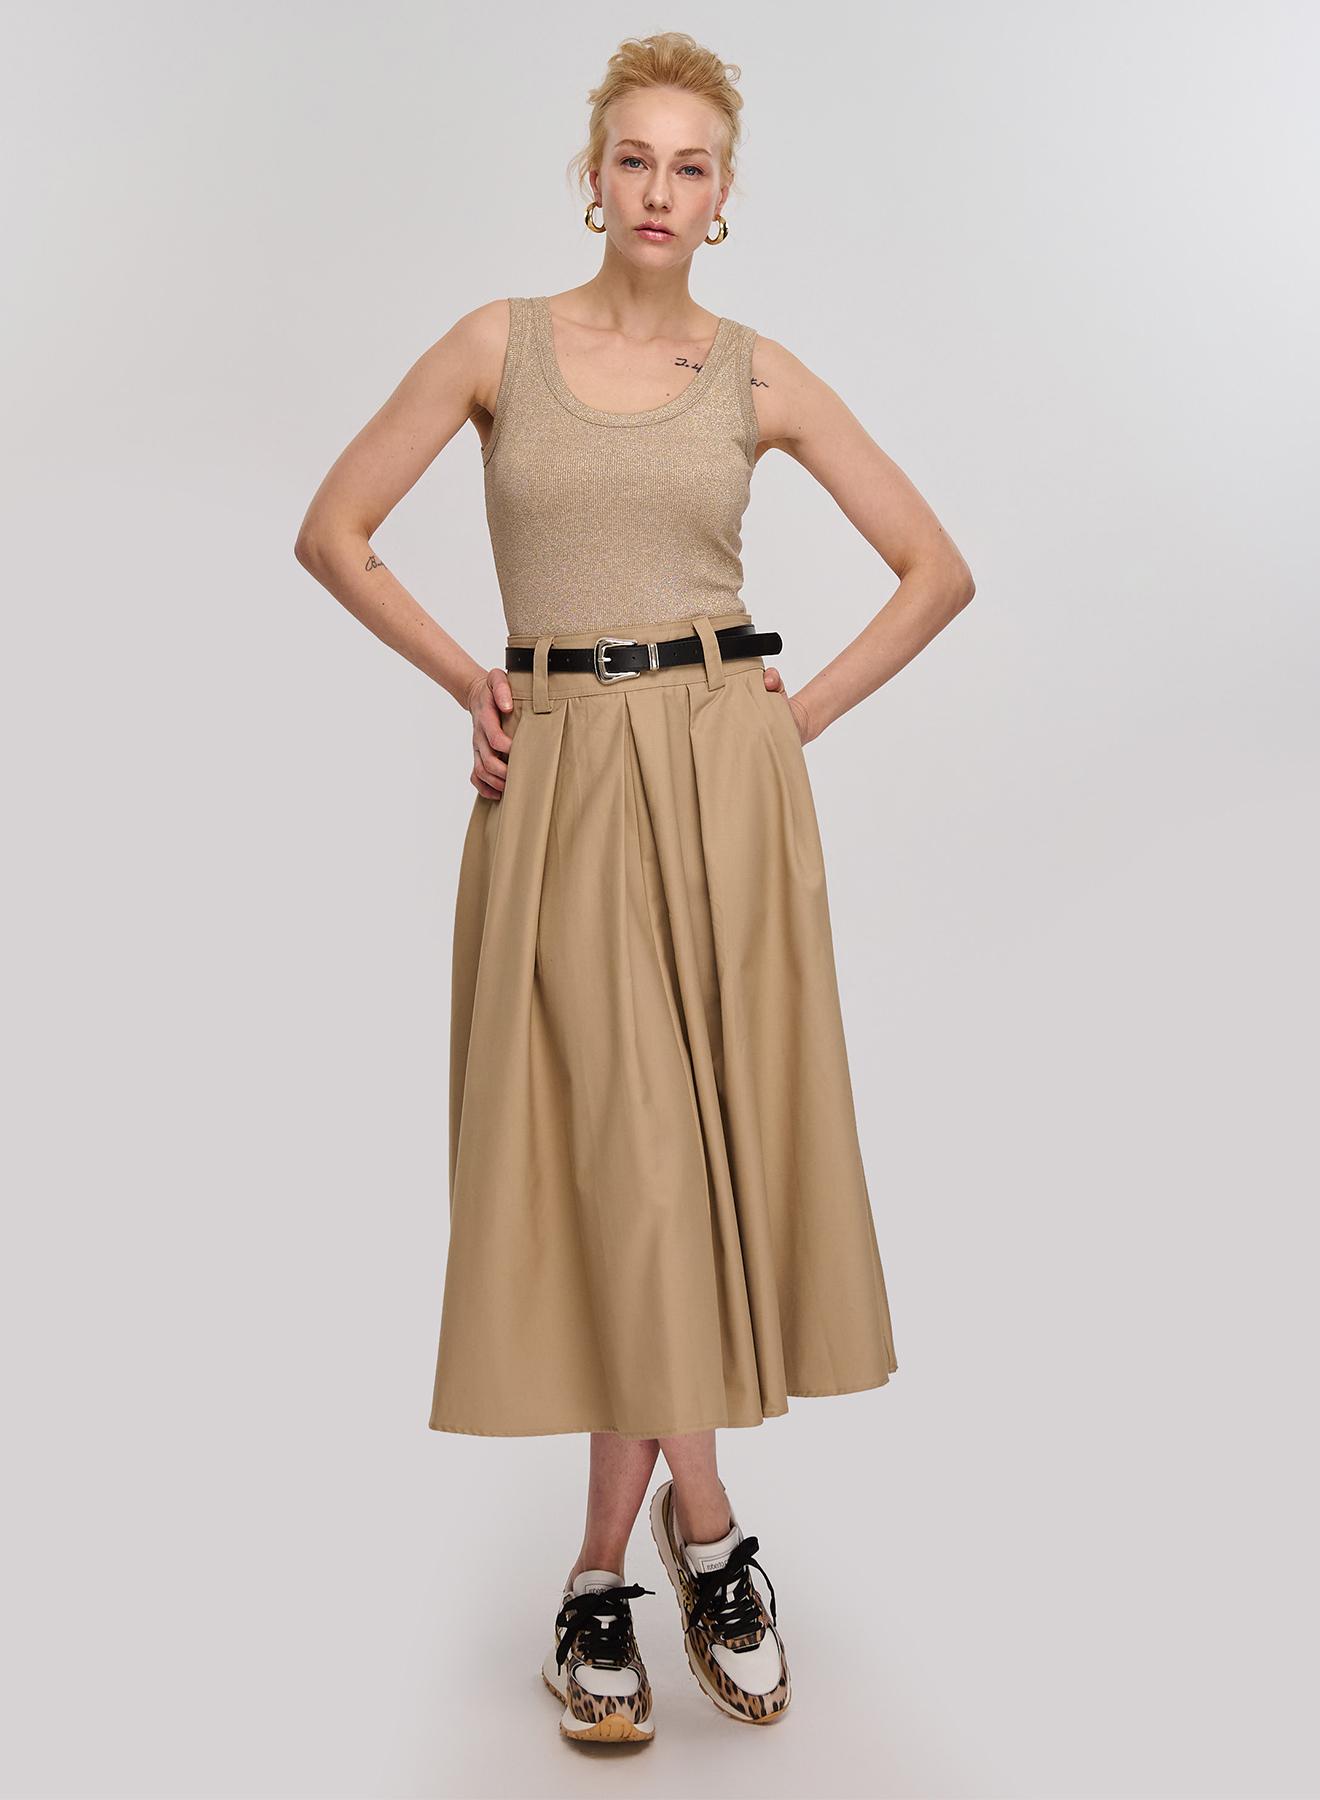 Camel pleated Skirt with Belt La Liberta - 3